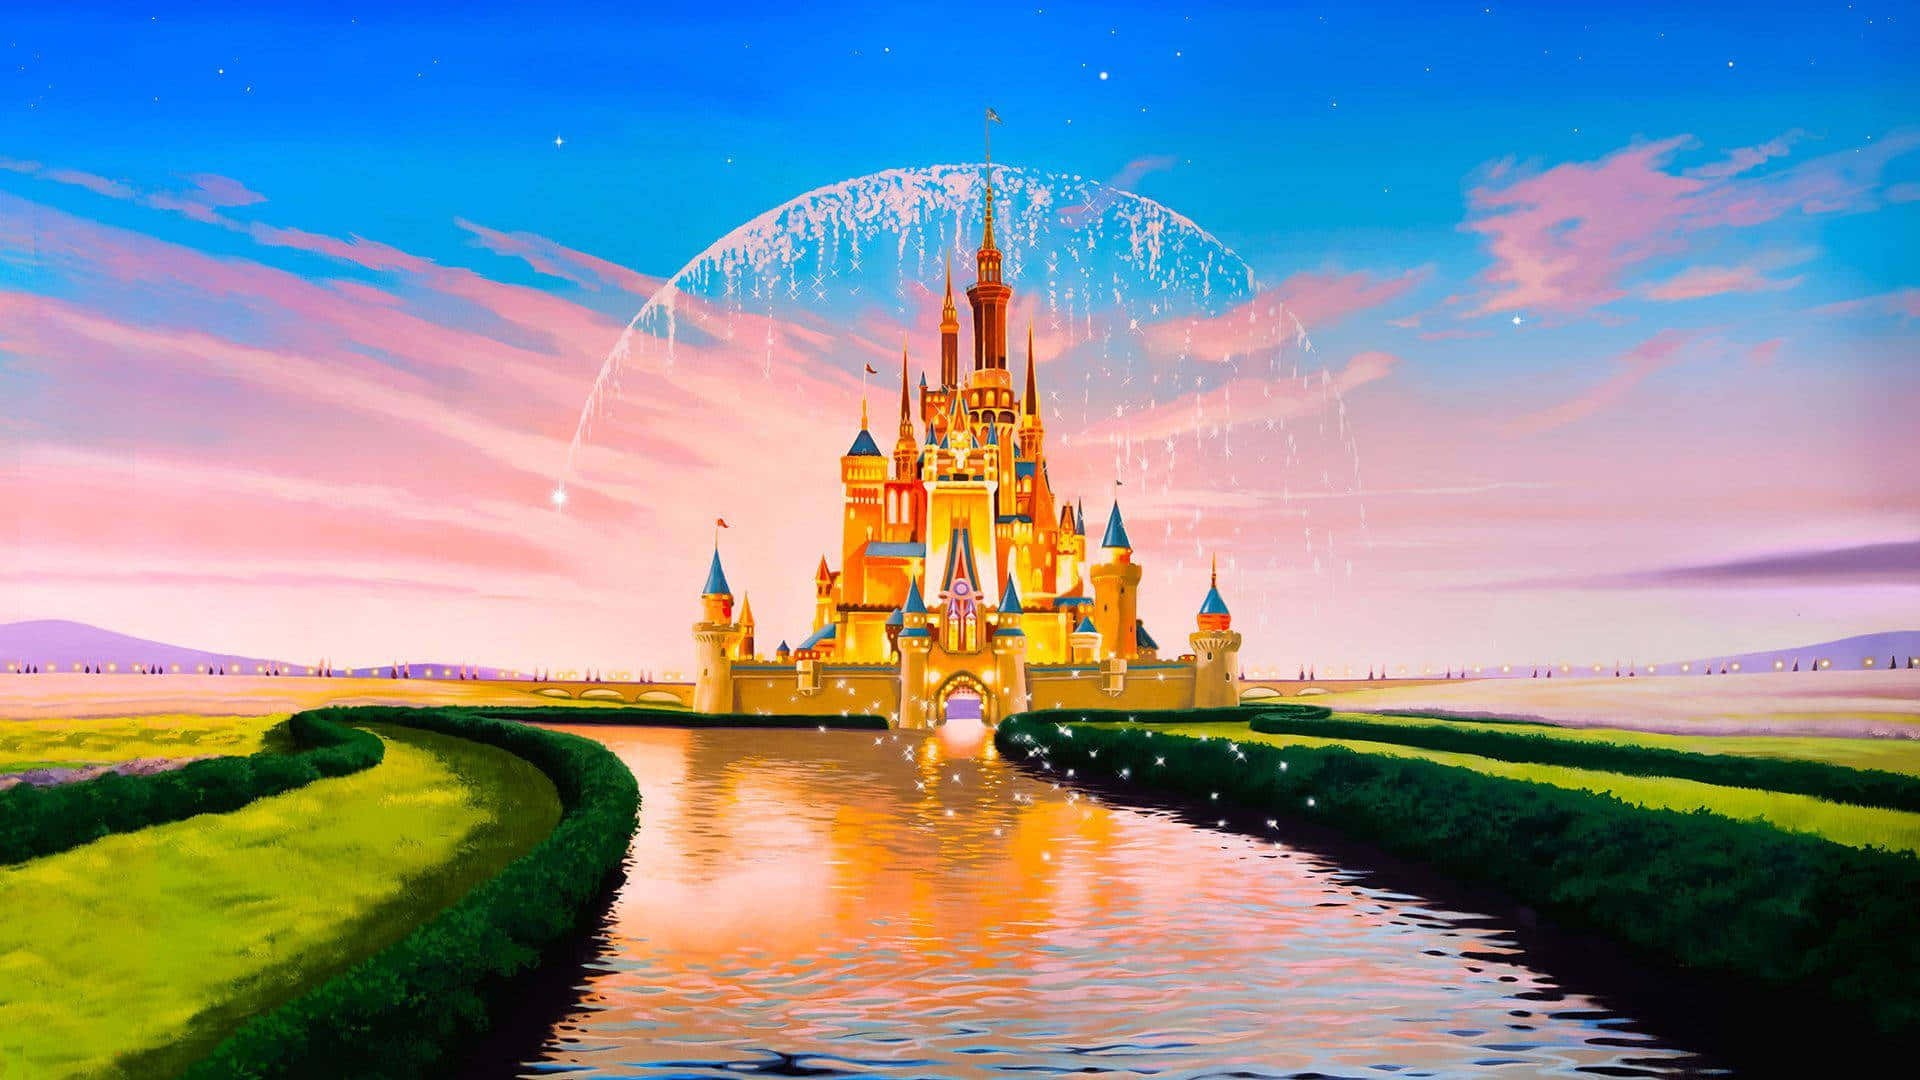 Enjoy the Magic of the Disney Castle!